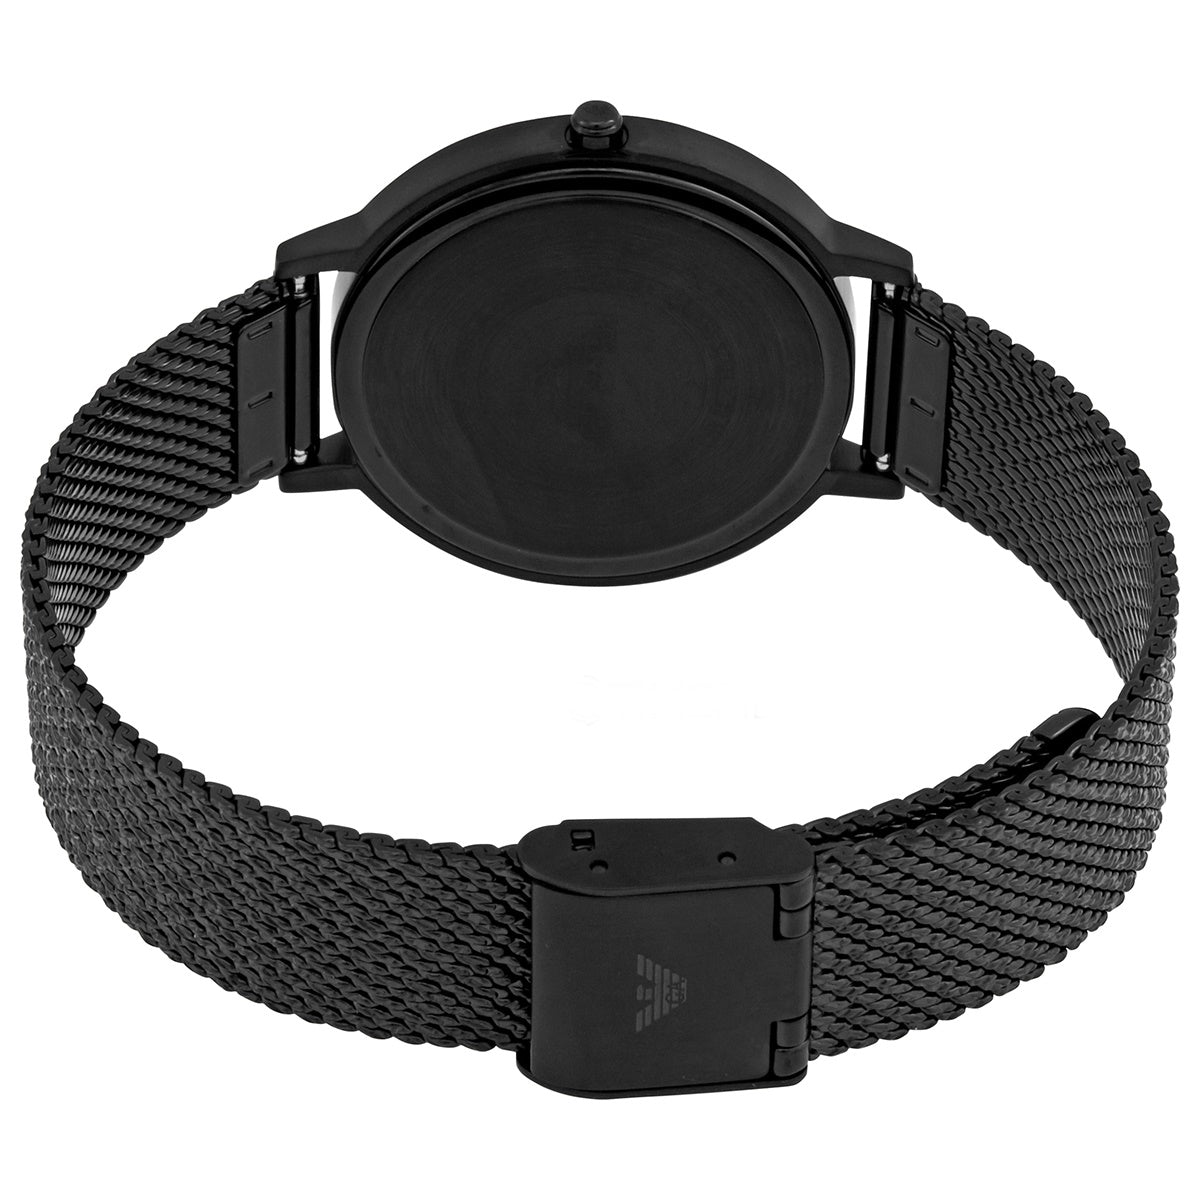 Emporio Armani Women’s Quartz Stainless Steel Black Dial 32mm Watch AR11252